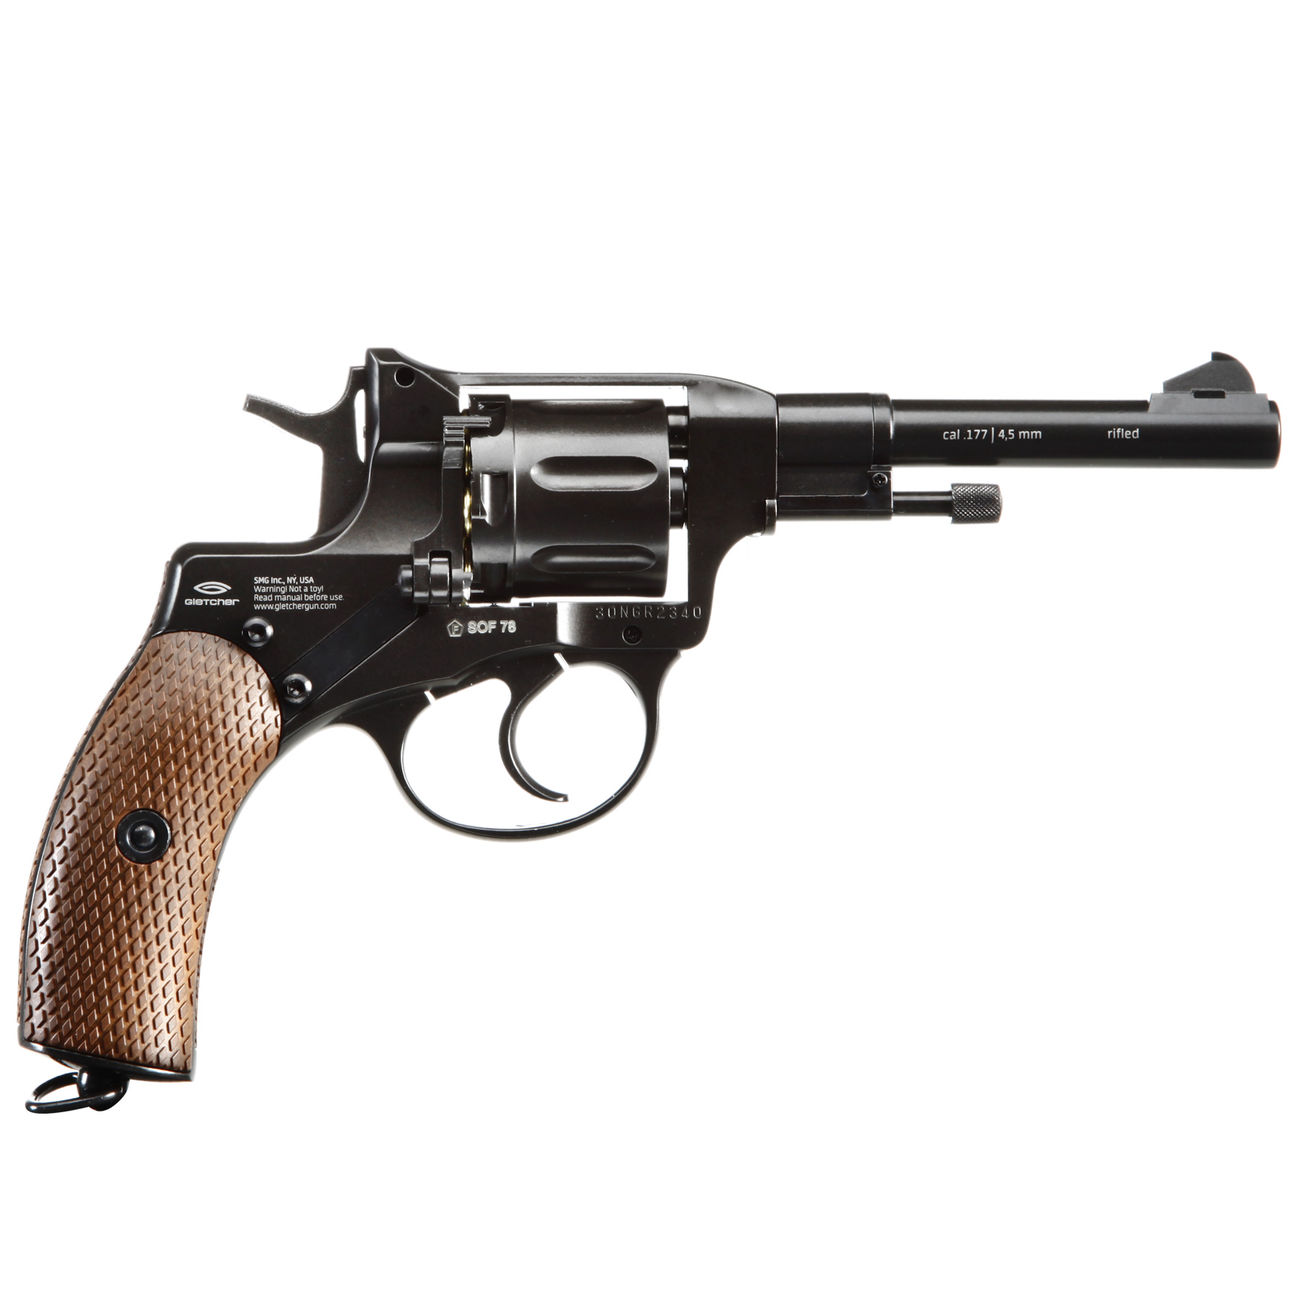 Gletcher CO2 Revolver NGT-R Kal. 4,5mm Diabolo schwarz Bild 1